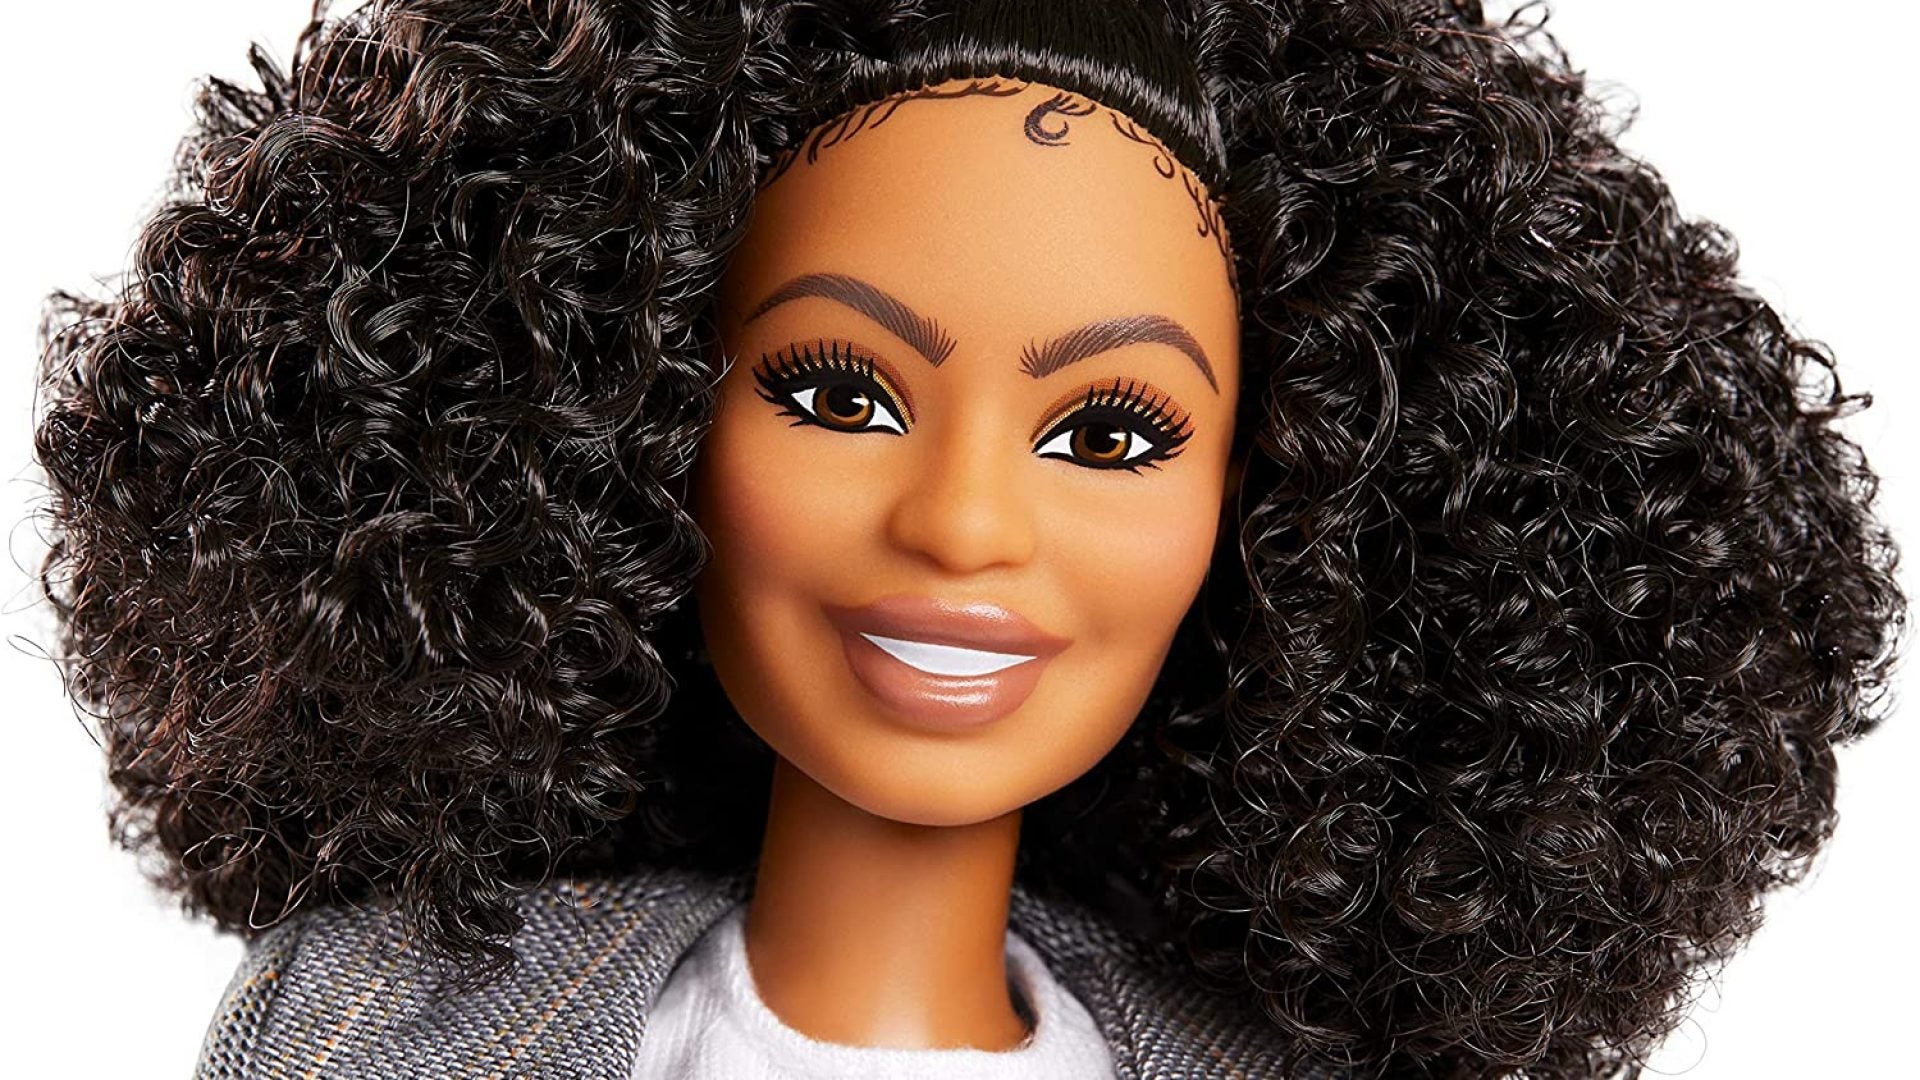 14 Black Women History Immortalized As Dolls